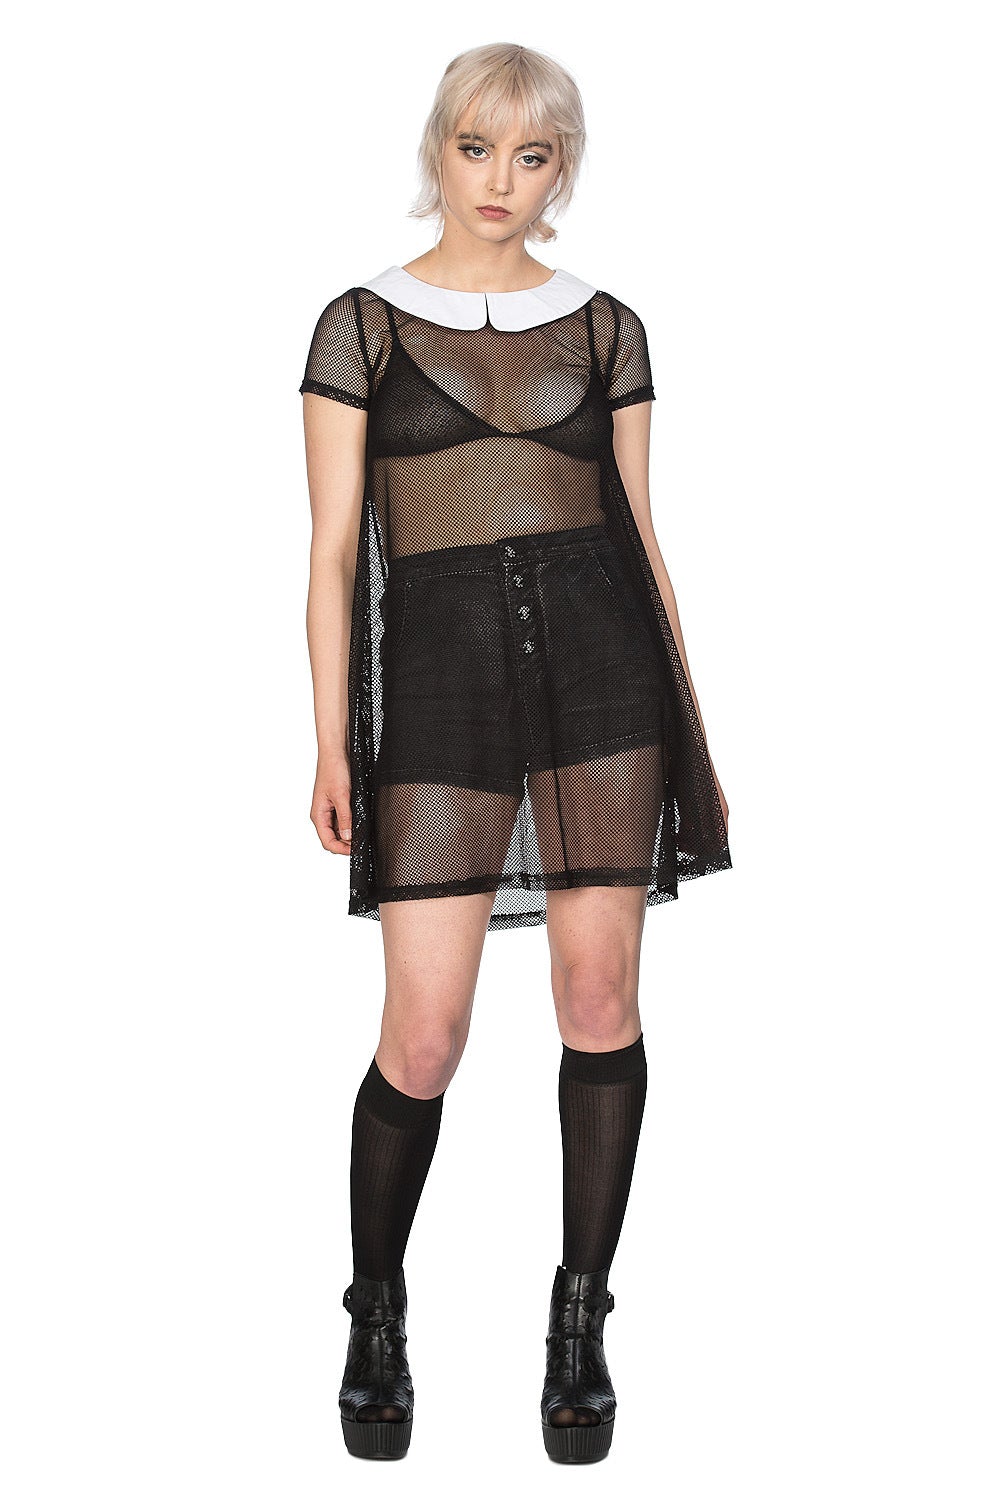 Alternative model in a mini sheer mesh black, short sleeved dress with white peter pan collar. 